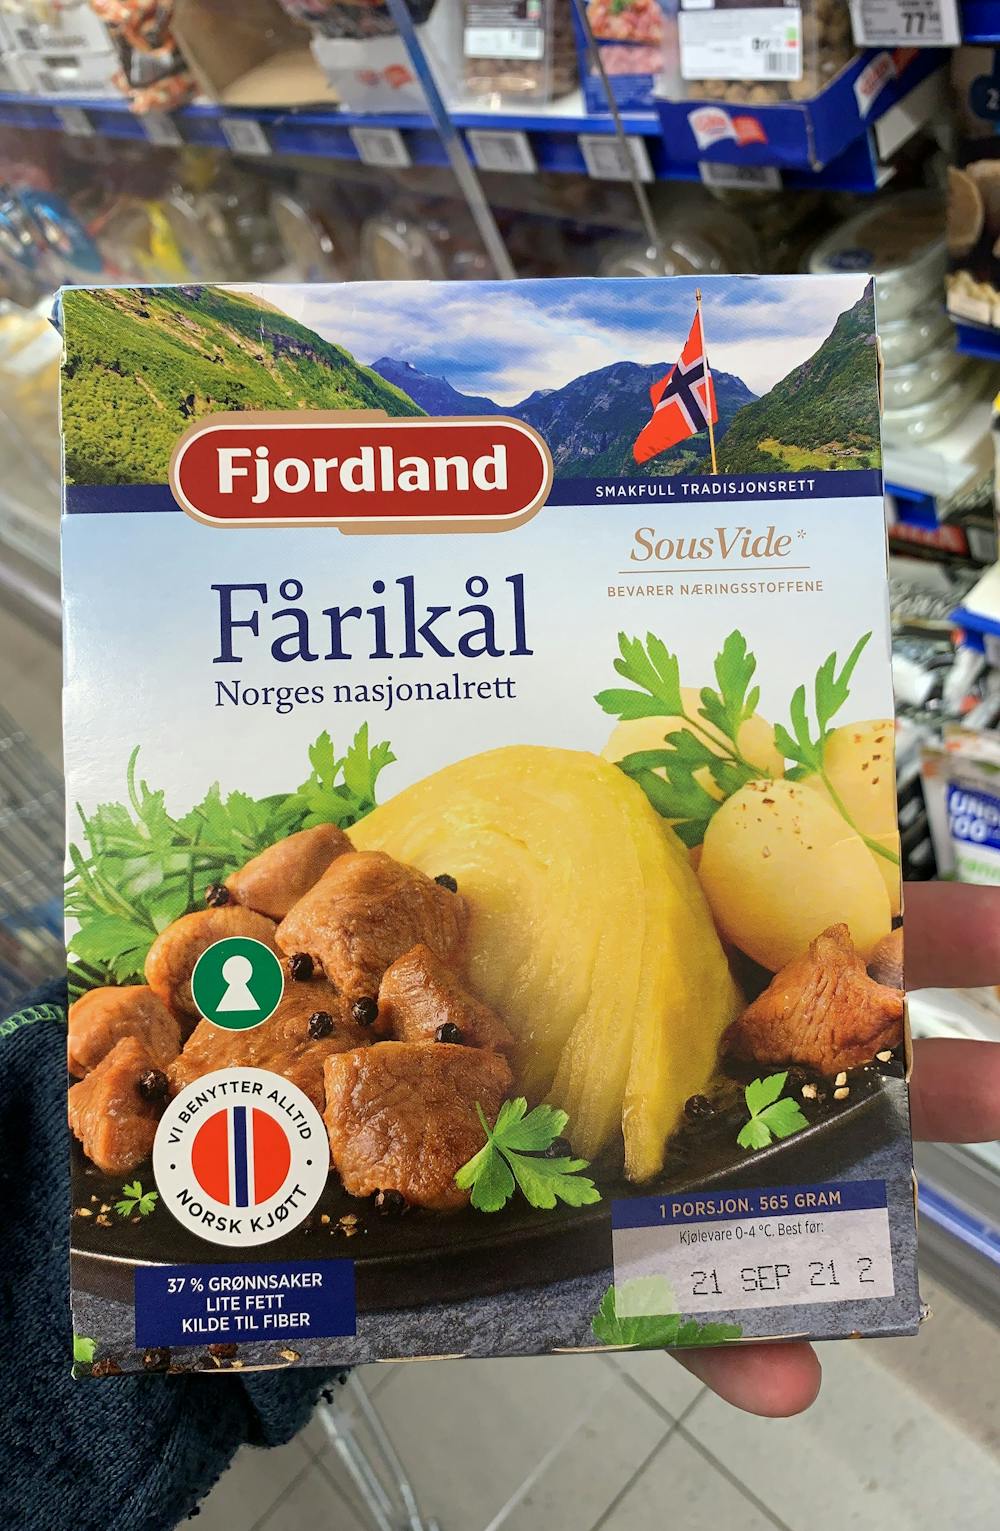 Fårikål, Fjordland